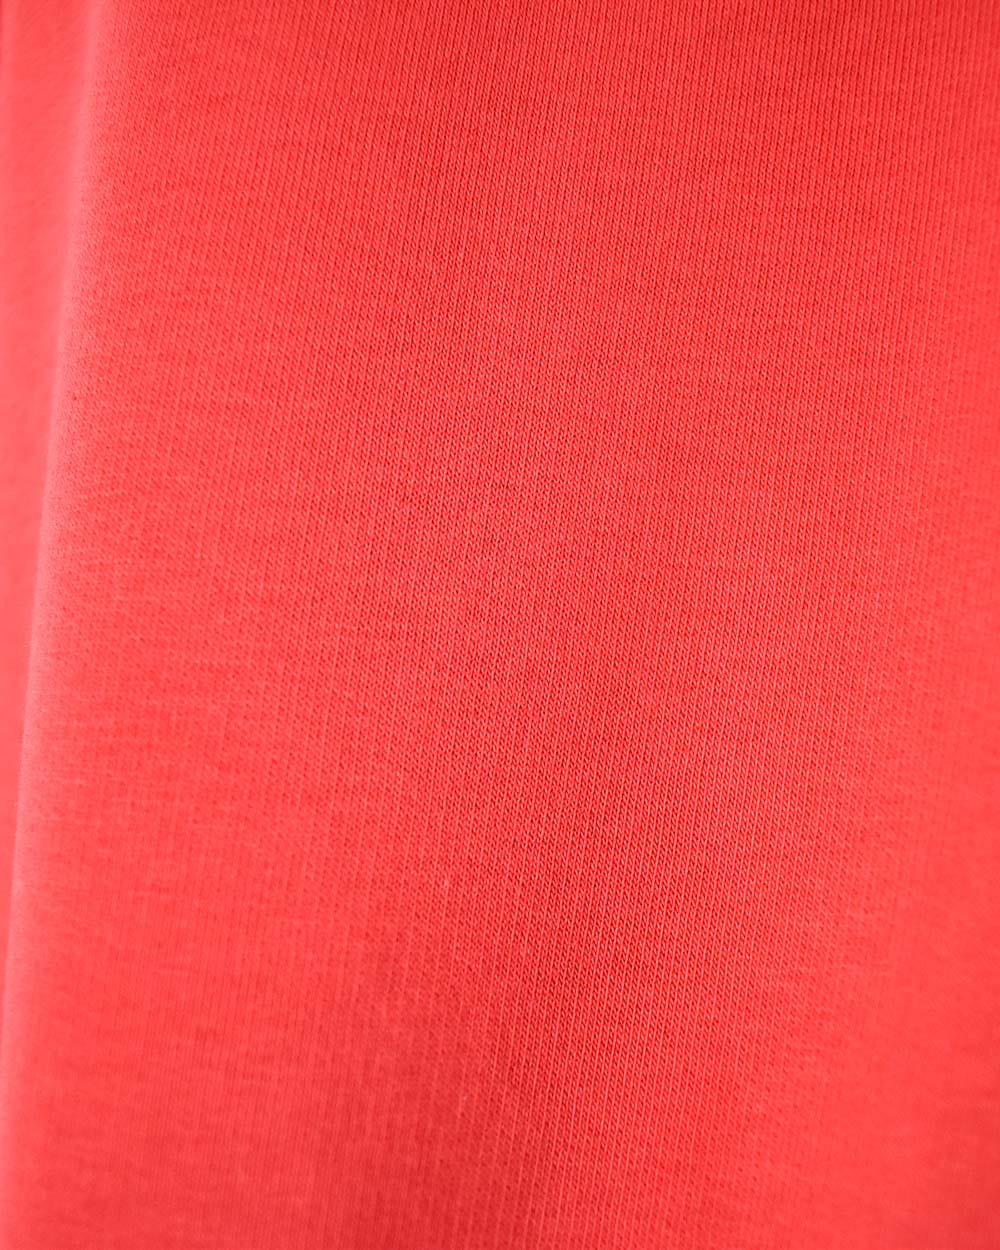 Red Fila Sweatshirt - X-Large